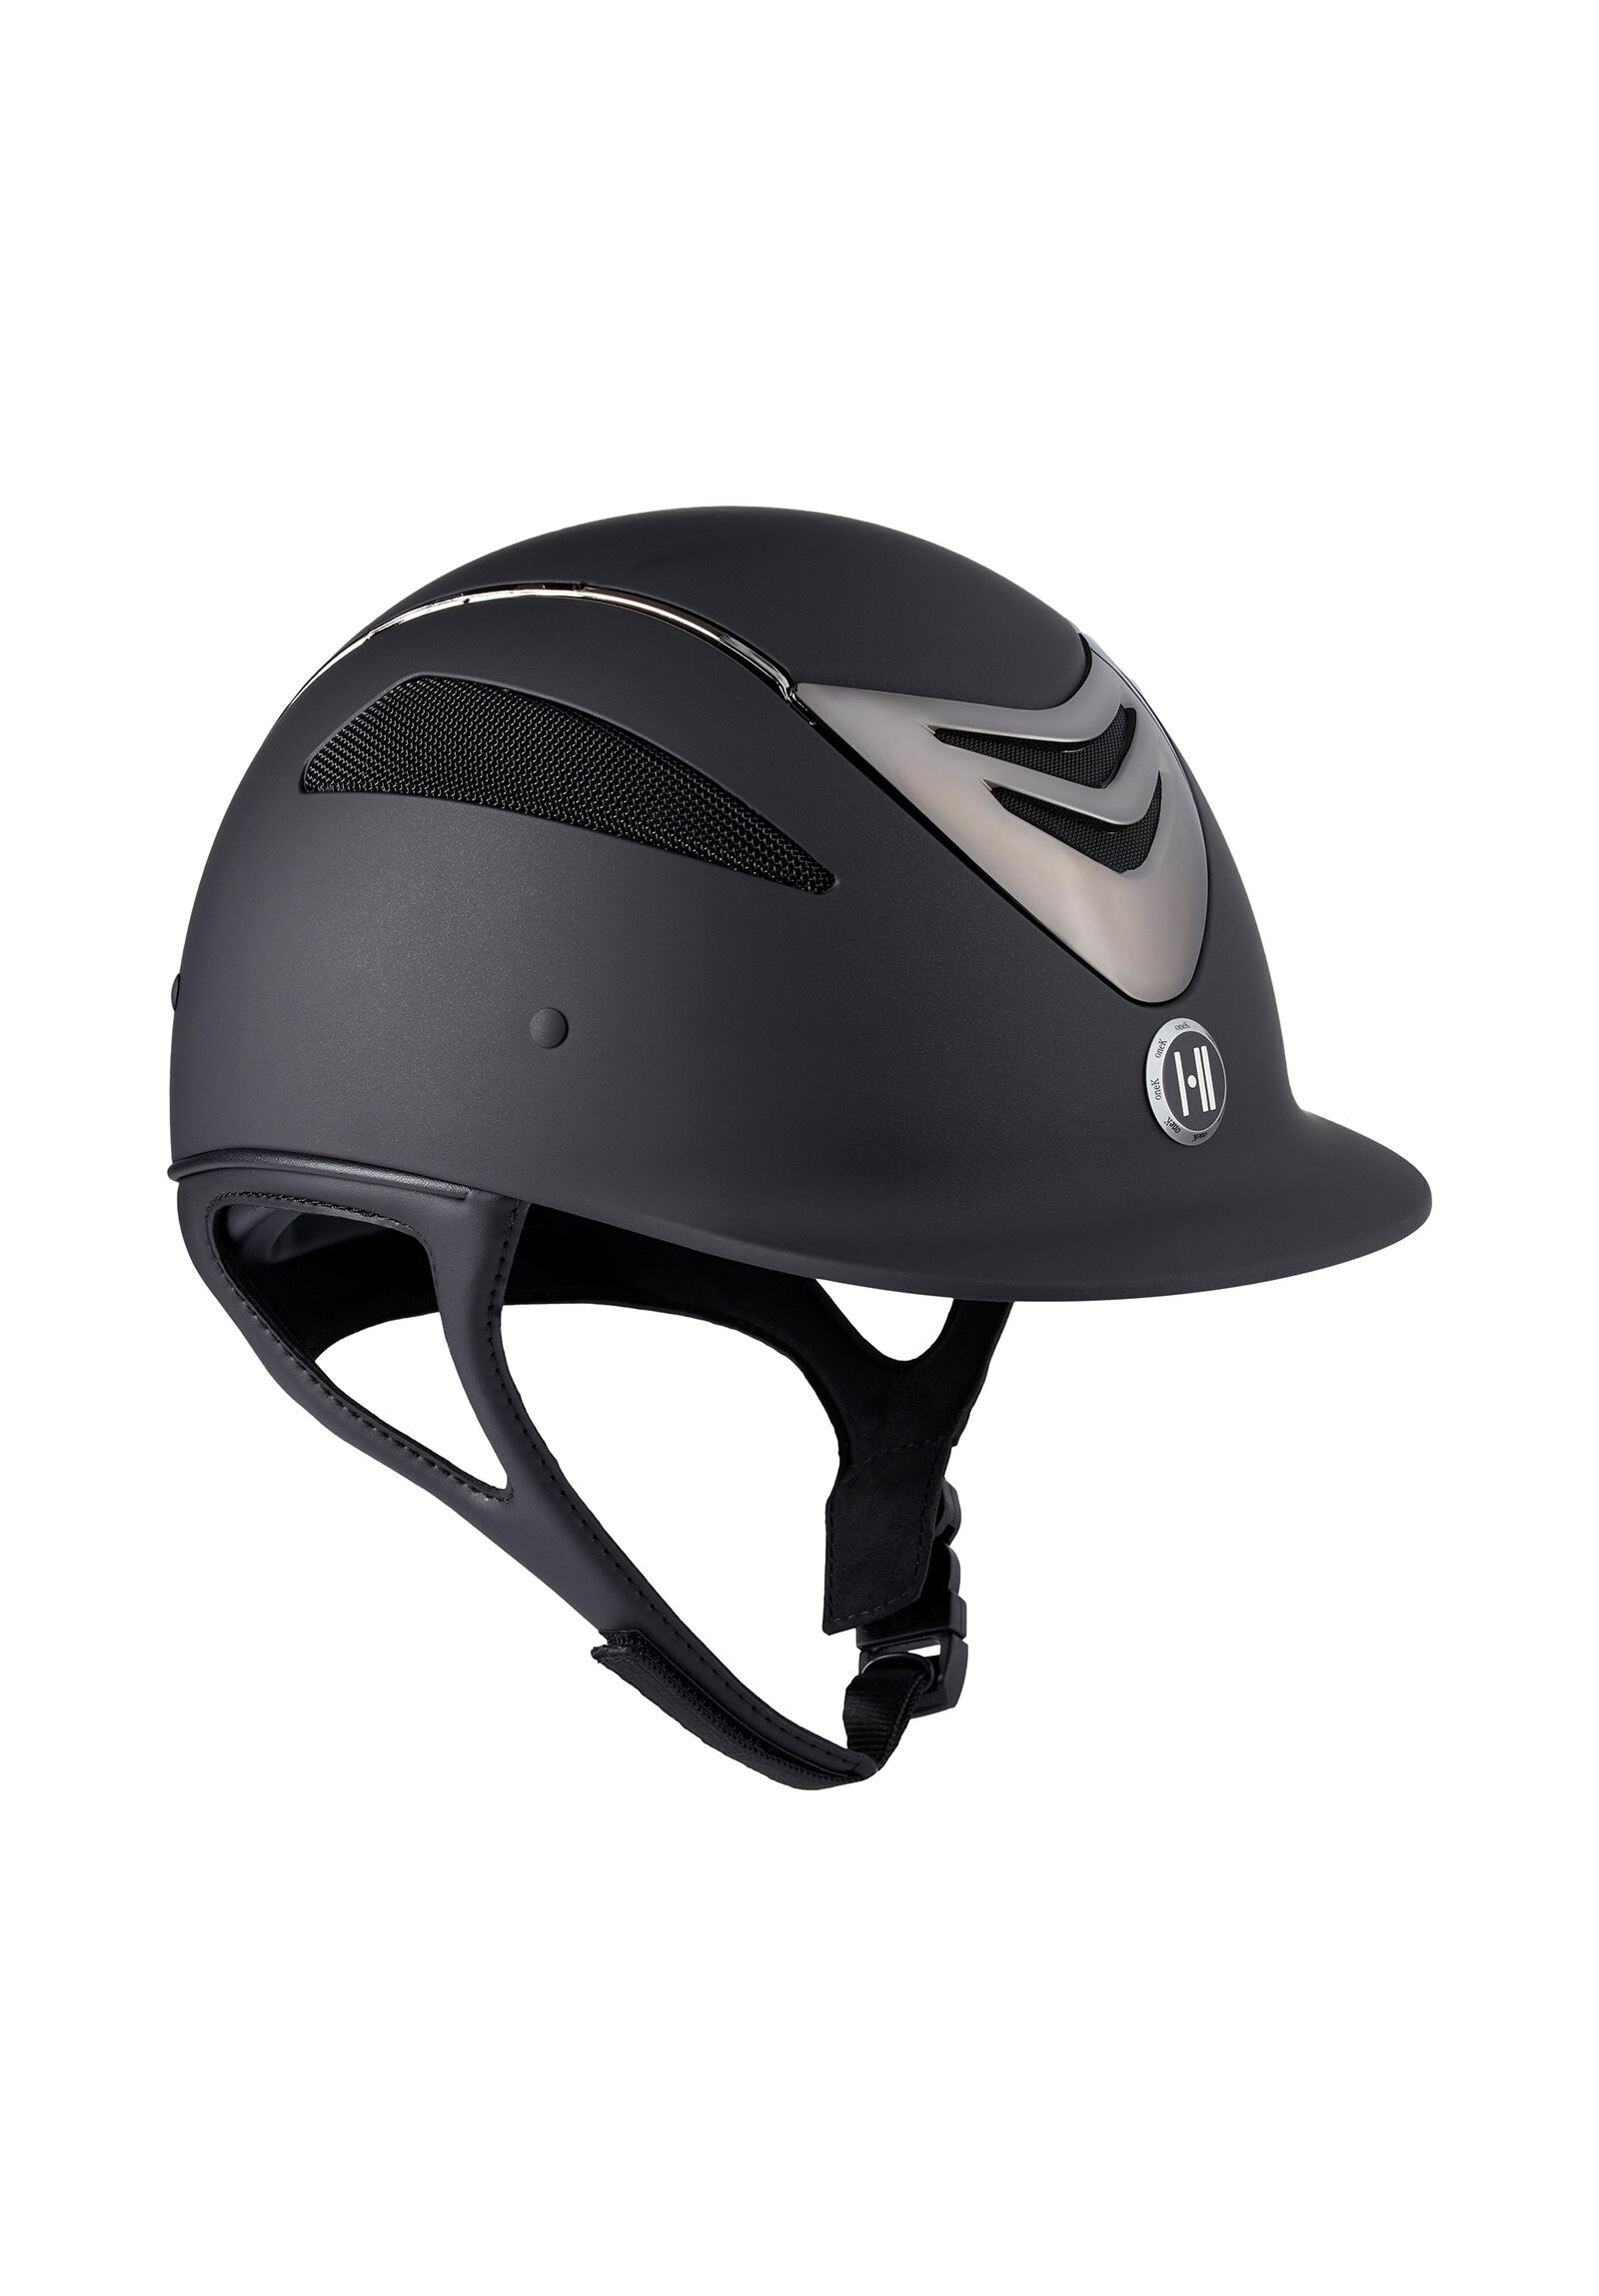 Buy OneK Defender Pro Matt Chrome Riding Helmet | horze.eu